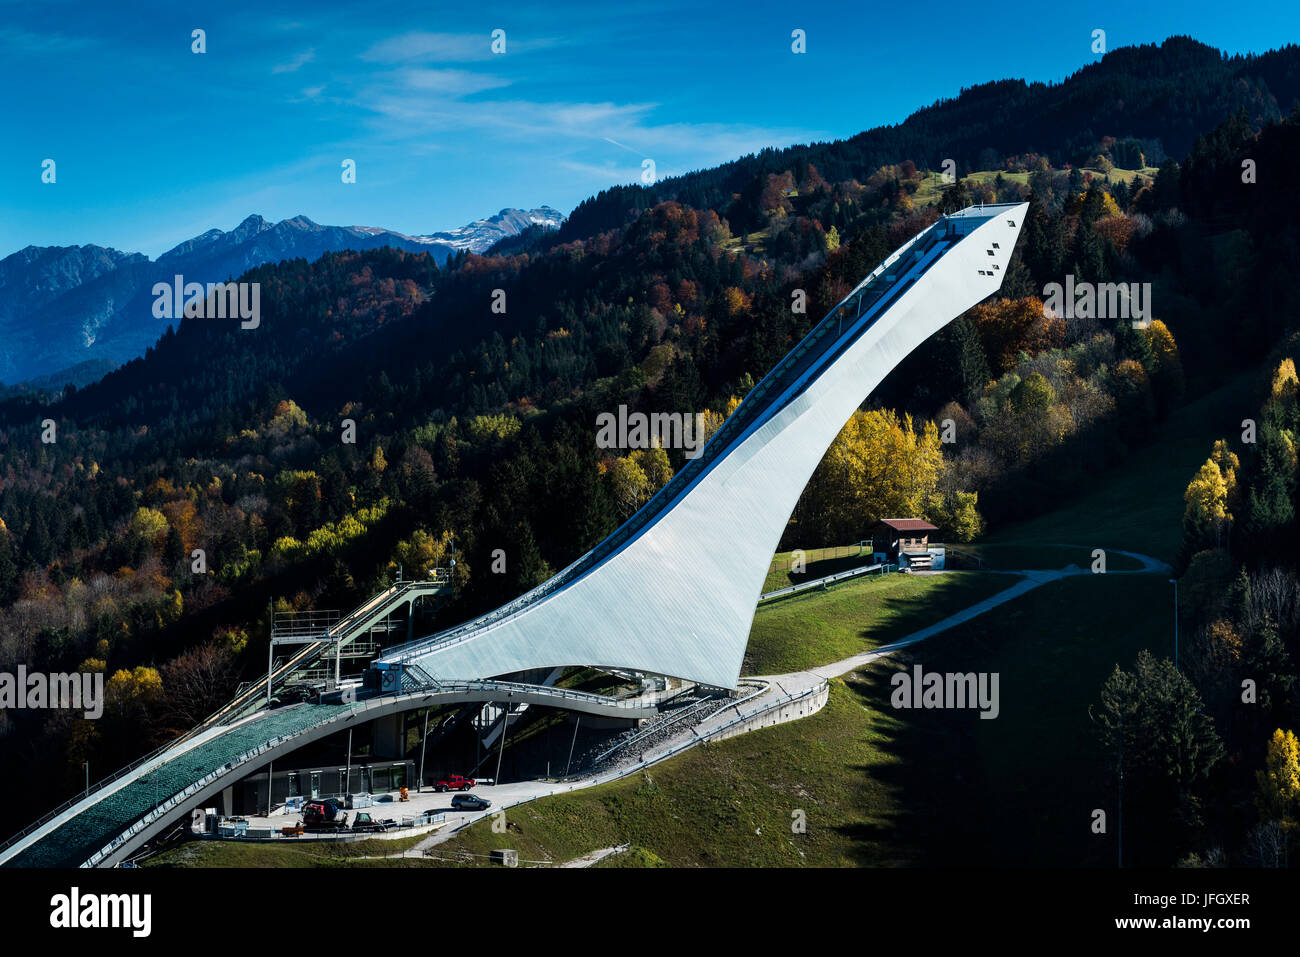 Salto con gli sci ski jump Garmisch-Partenkirchen, autunno, antenna scatti, Werdenfels, altipiani, bavaresi, Germania Foto Stock